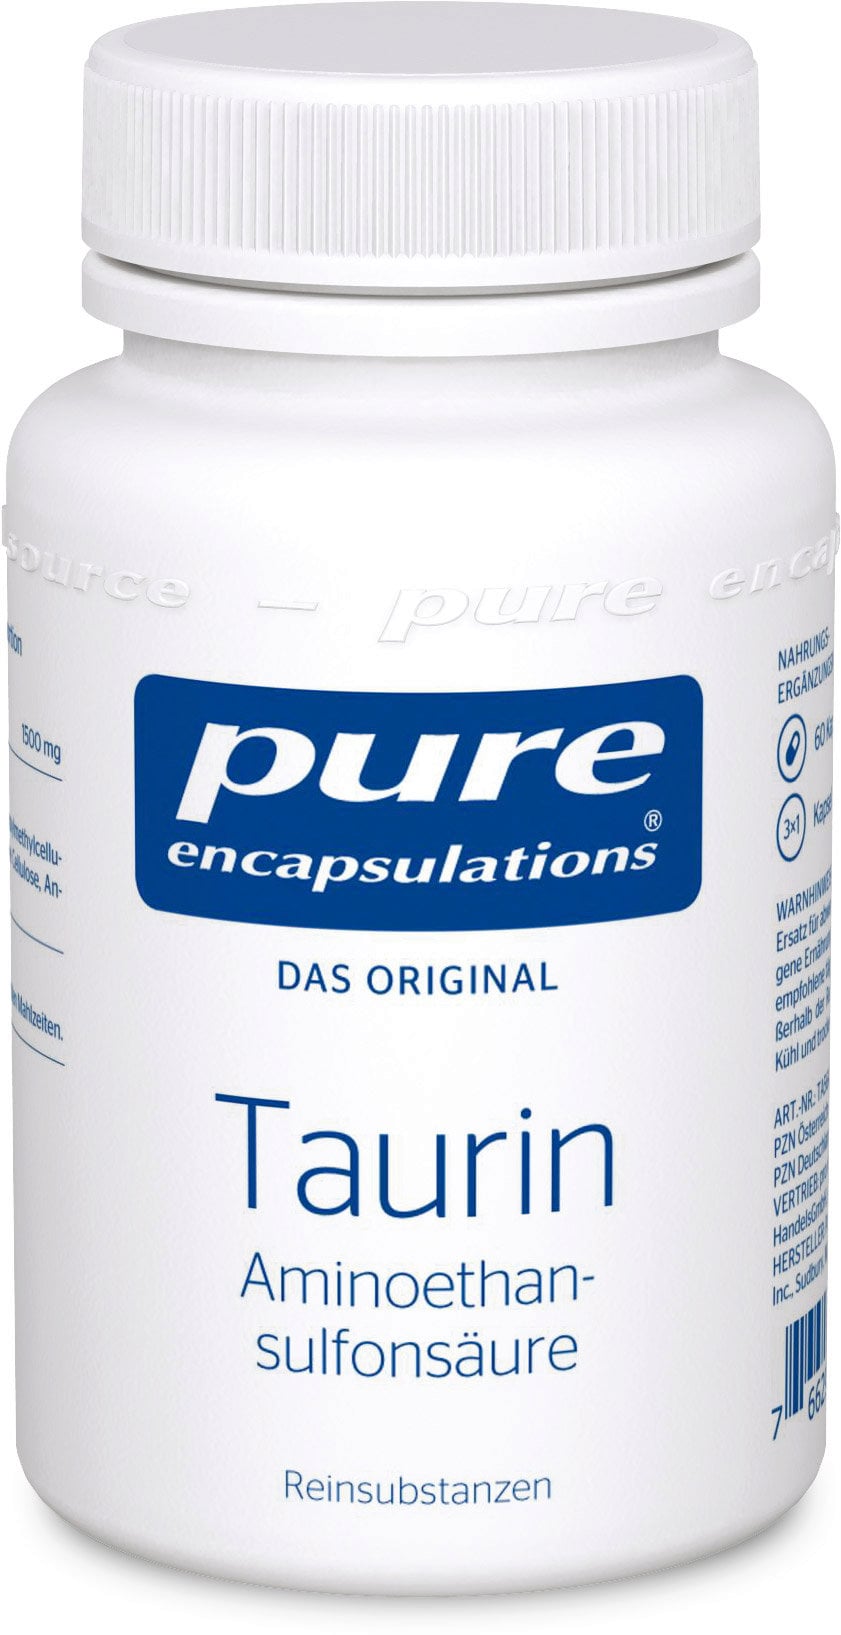 pure encapsulations Taurin